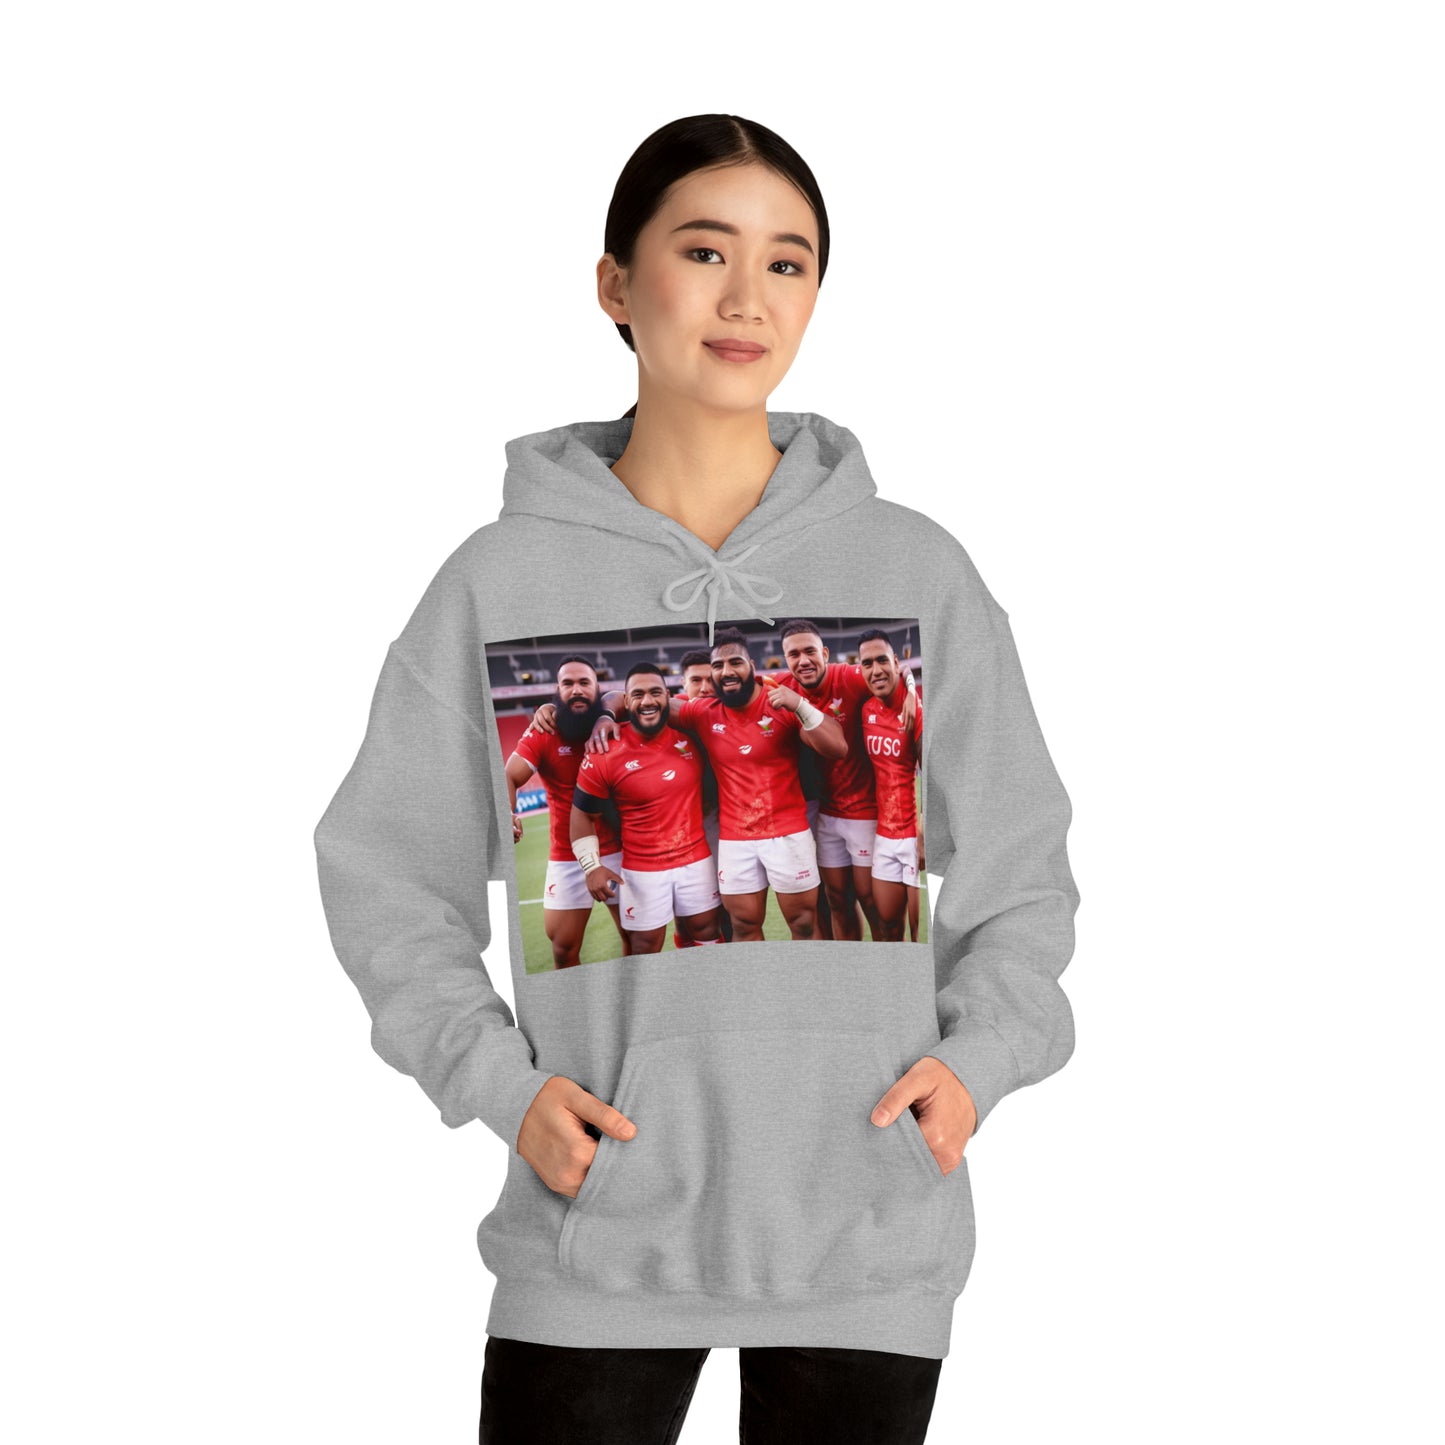 Post Match Tonga - light hoodies